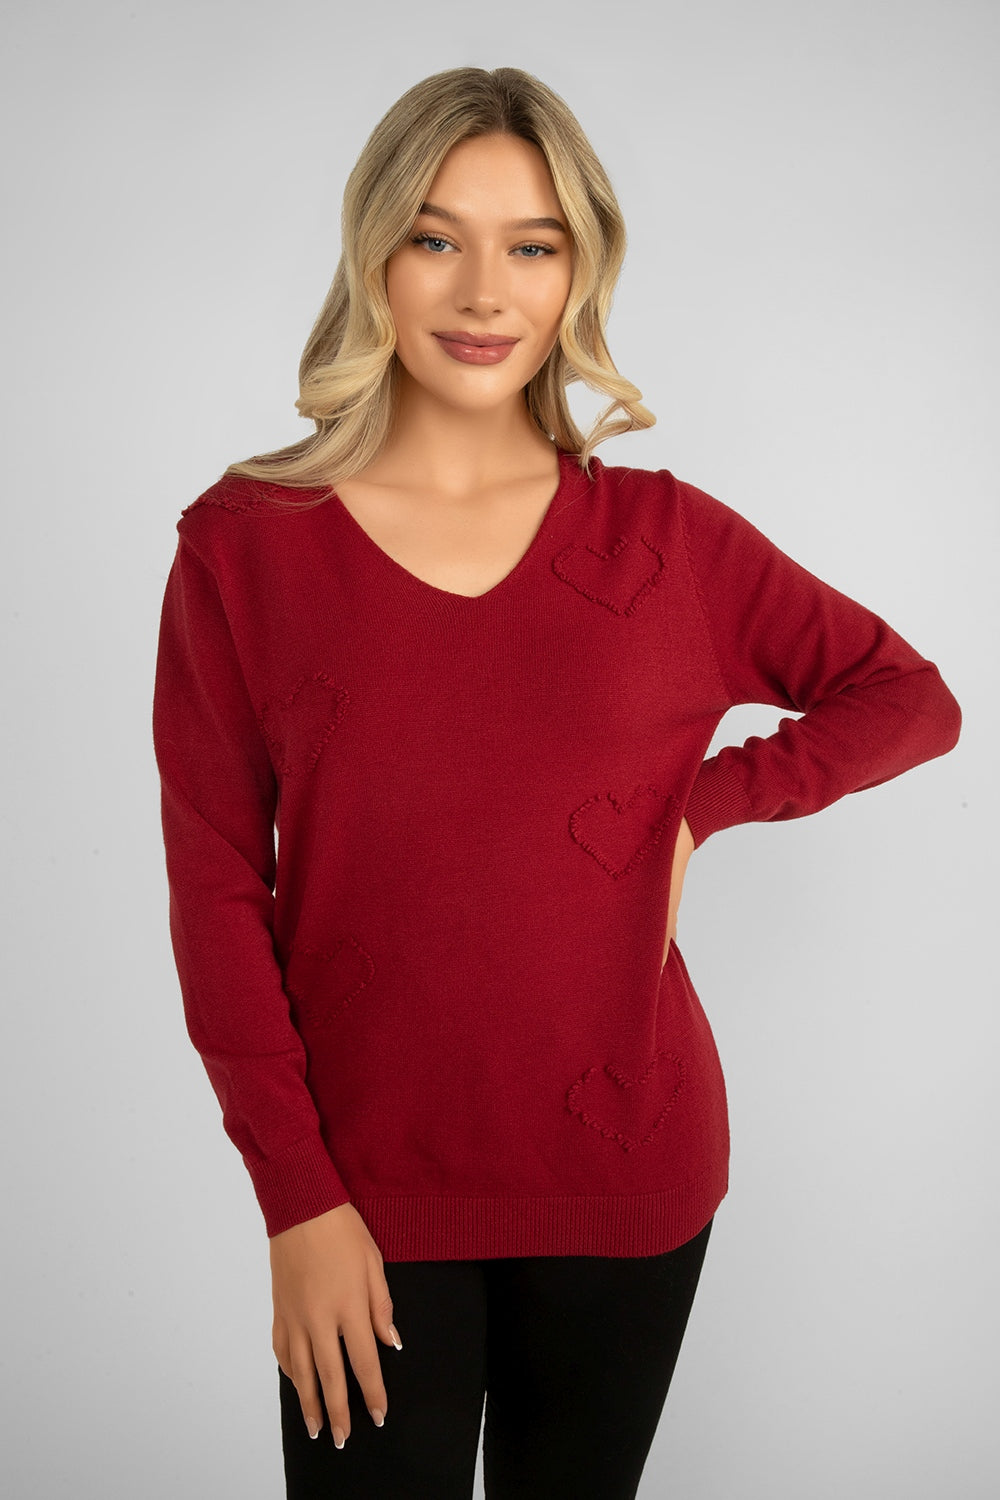 Women's Clothing FEMME FATALE (W-64VSW) Stitched Heart Sweater in WINE